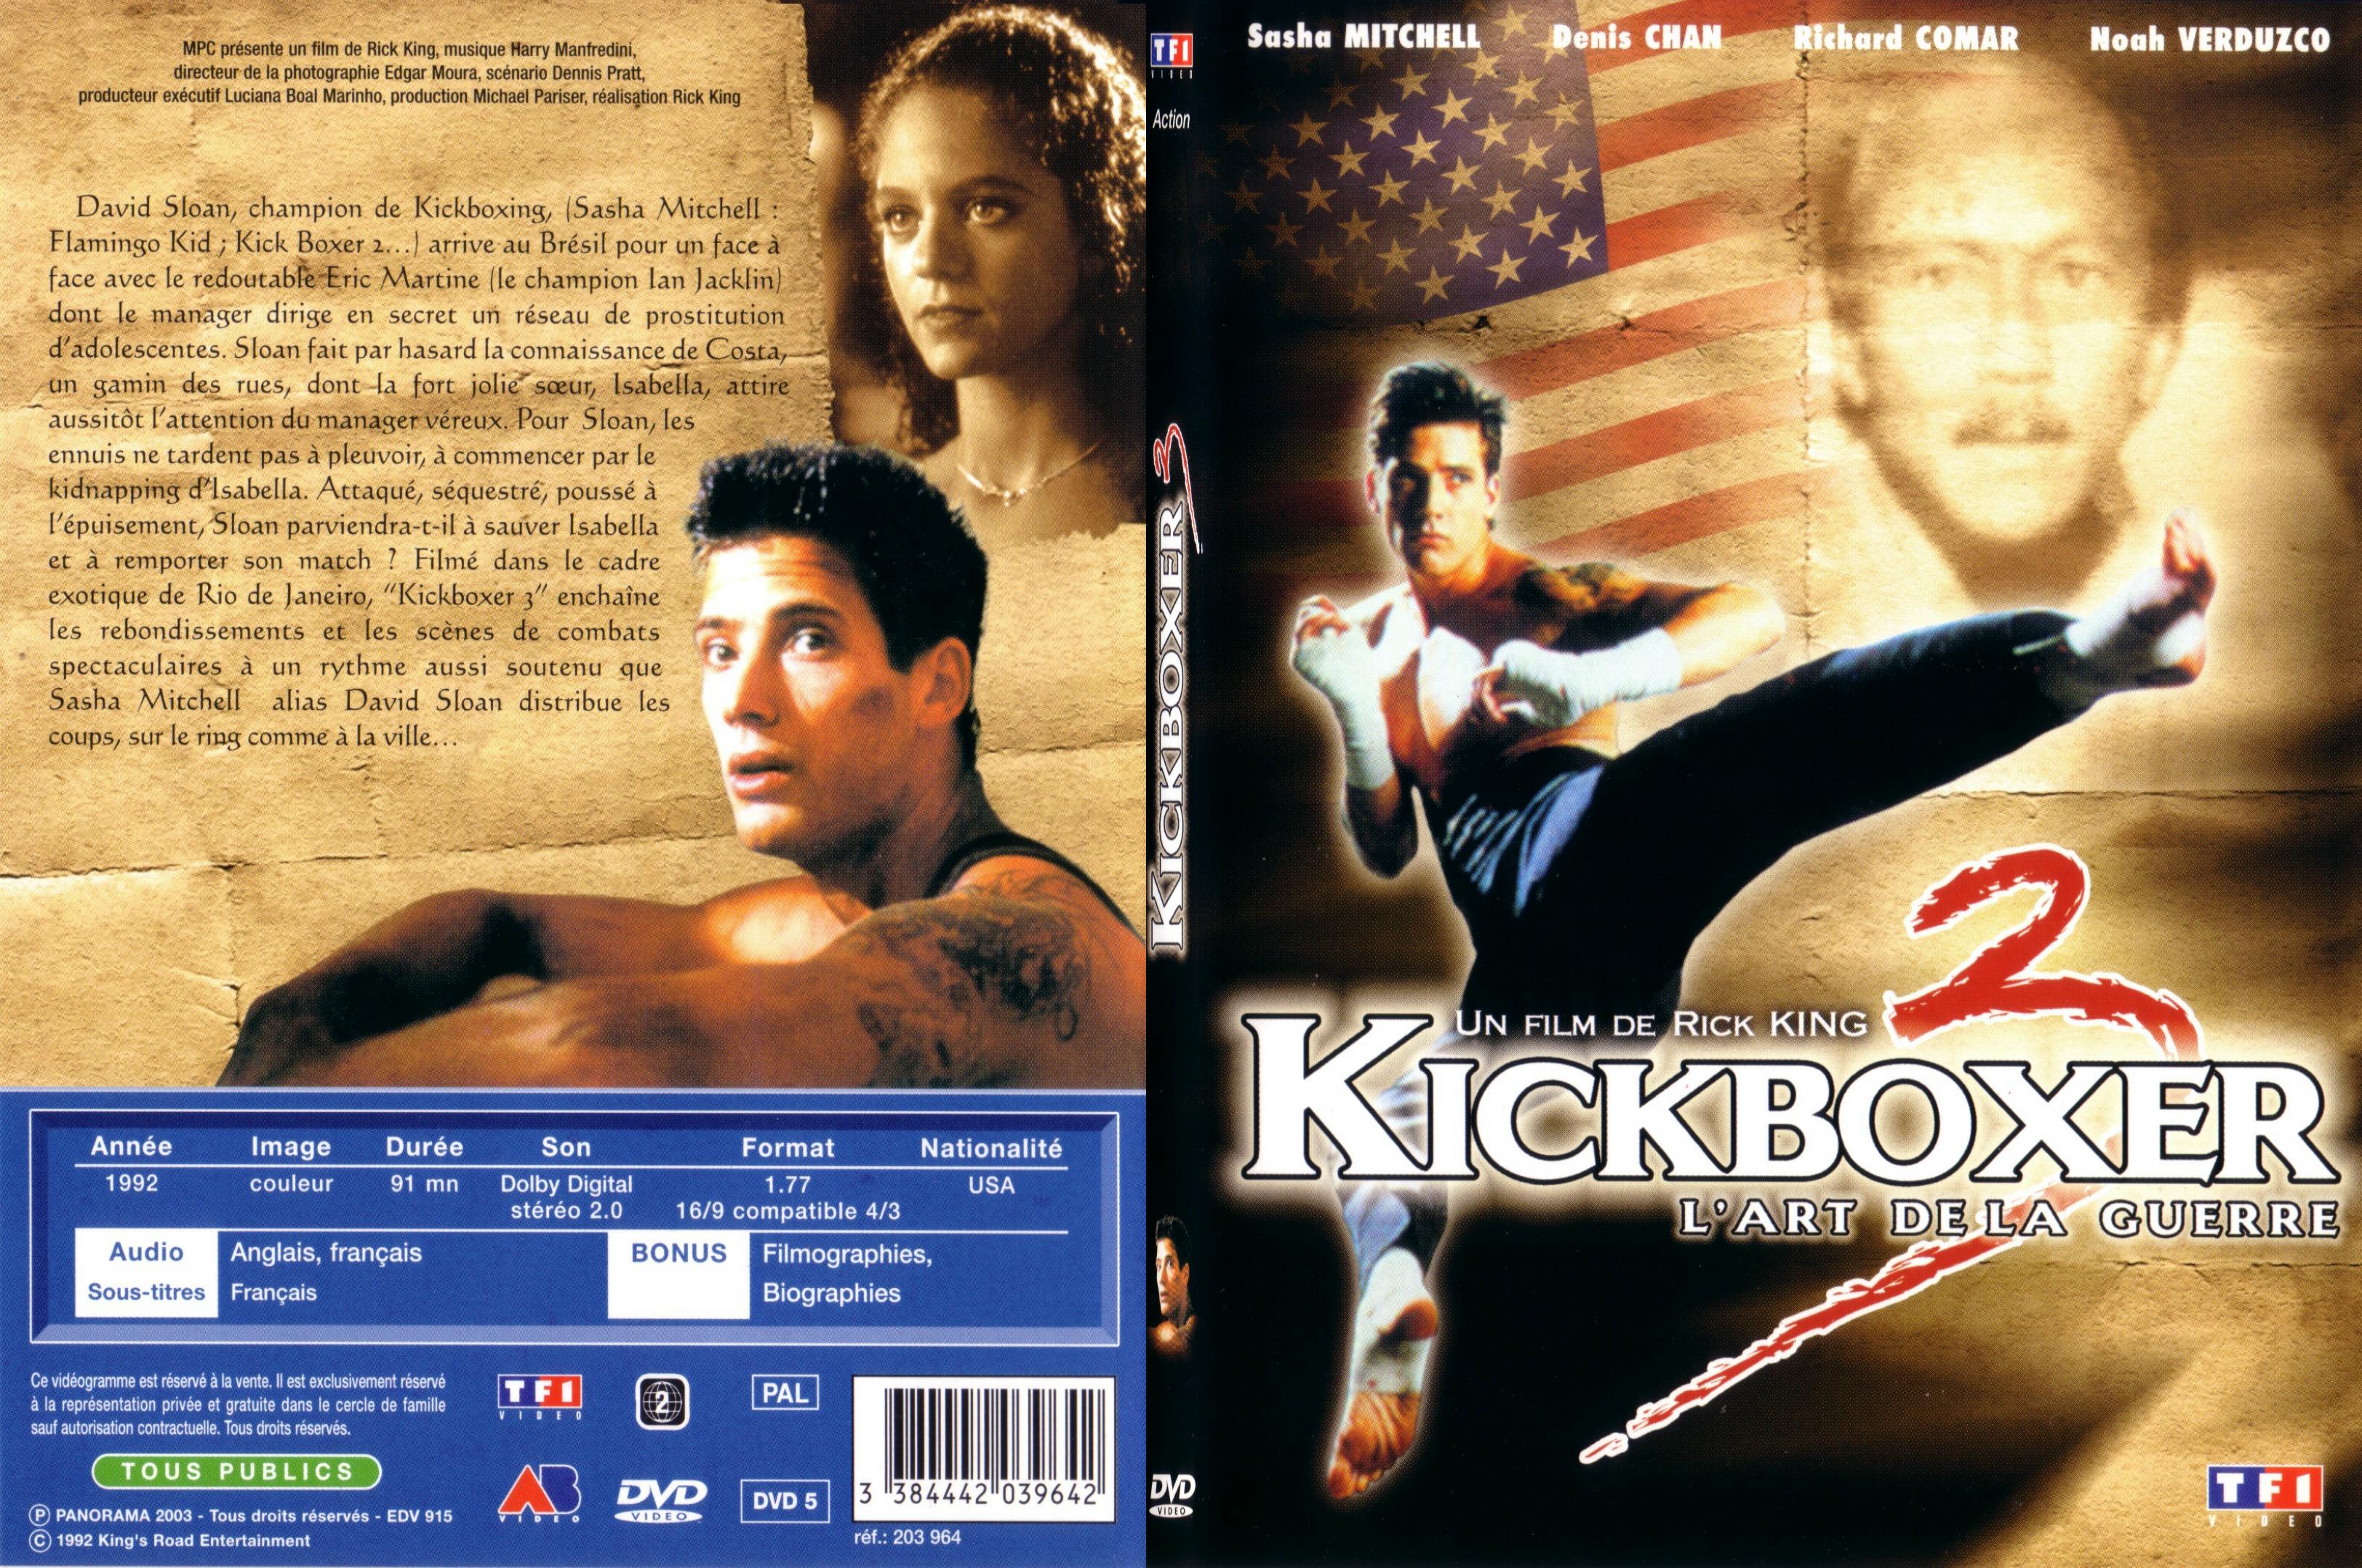 Jaquette DVD Kickboxer 3 - SLIM